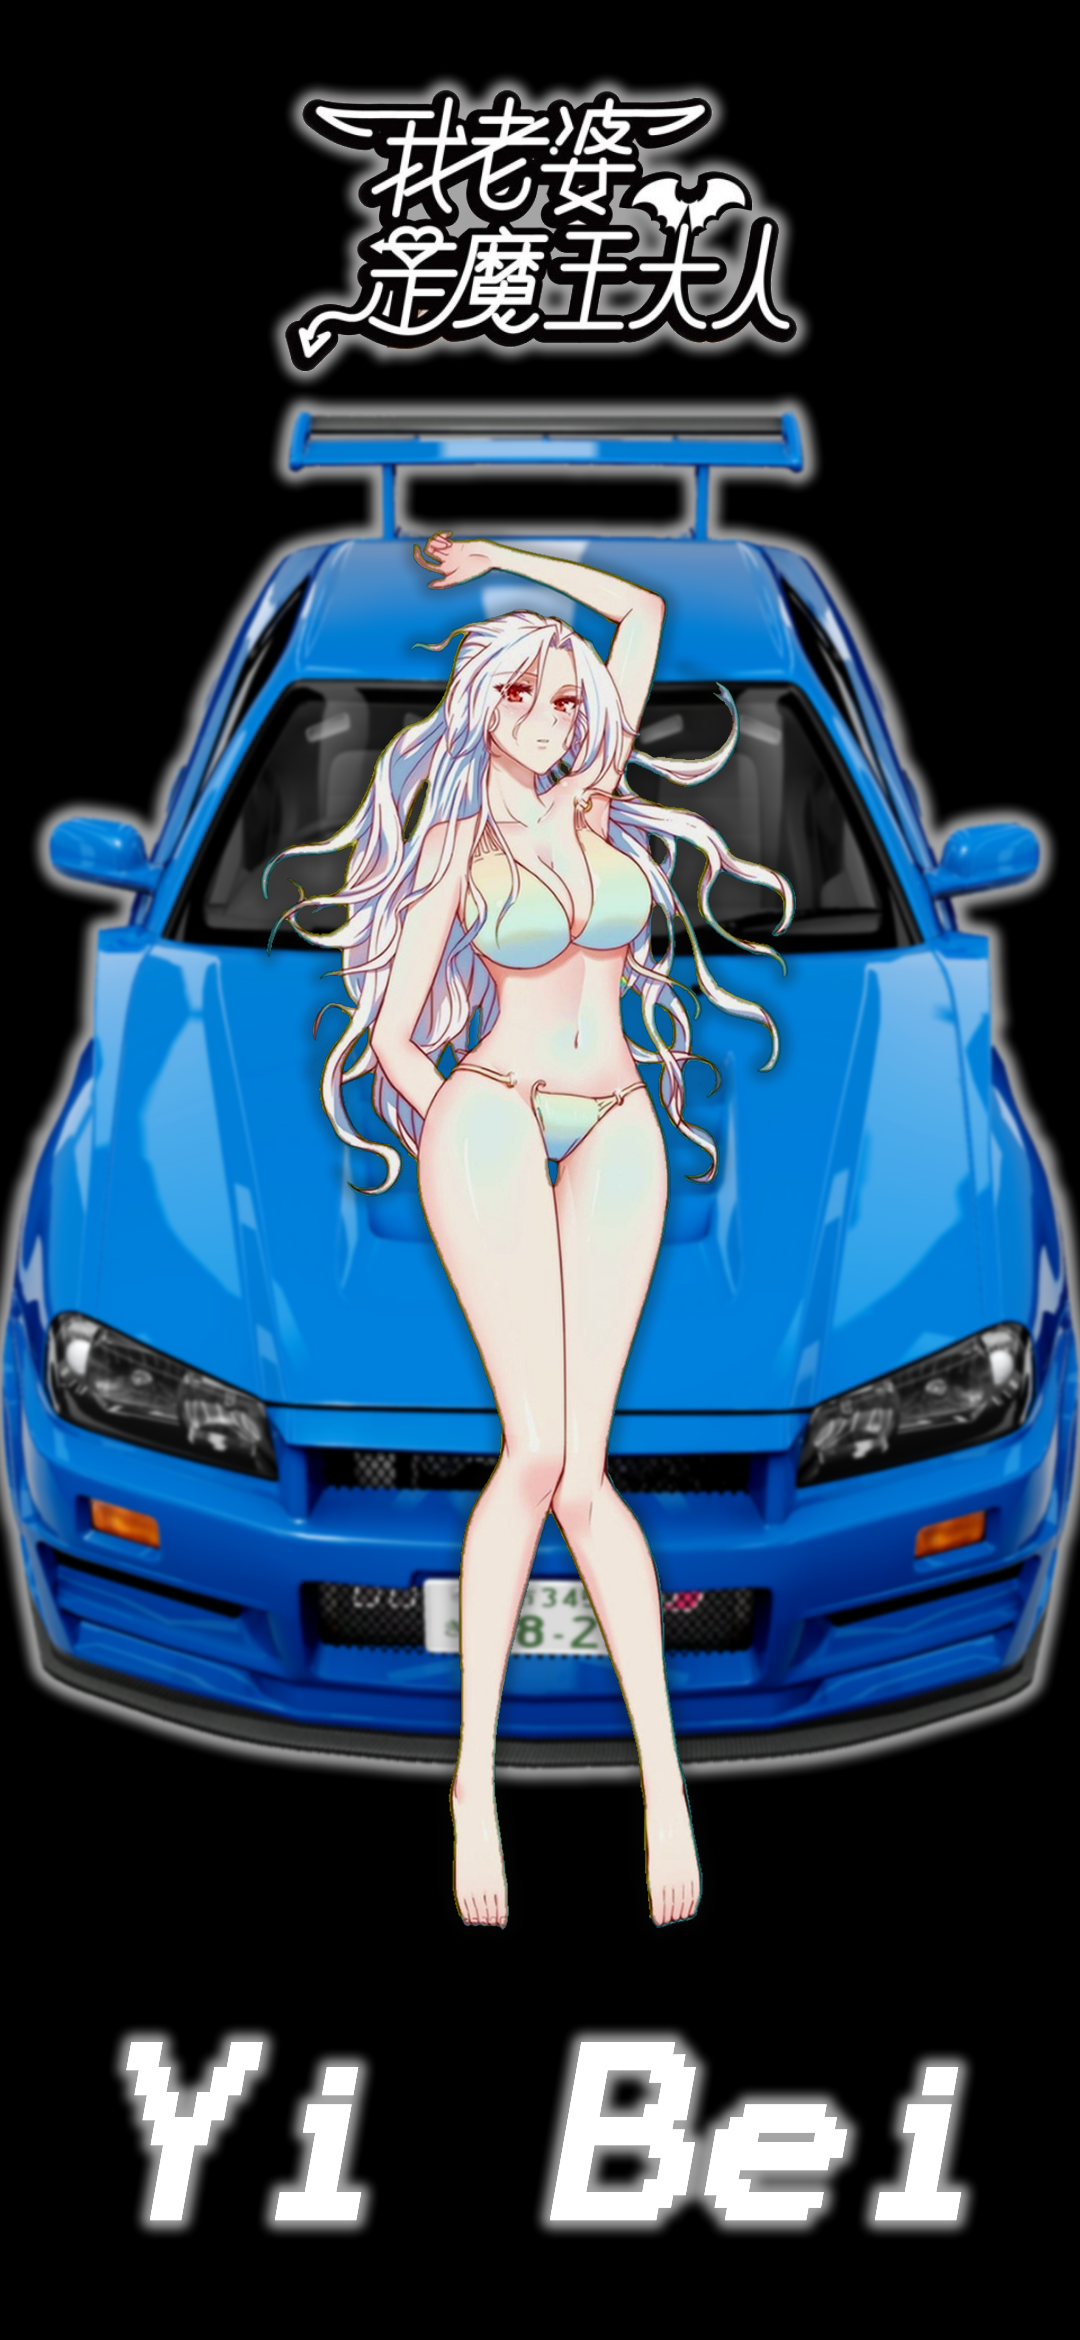 JDM Anime Girls Anime Women With Cars Car Vehicle Blue Cars Knees Together  Long Hair Legs Blue Bikin Wallpaper - Resolution:1080x2340 - ID:1223688 -  